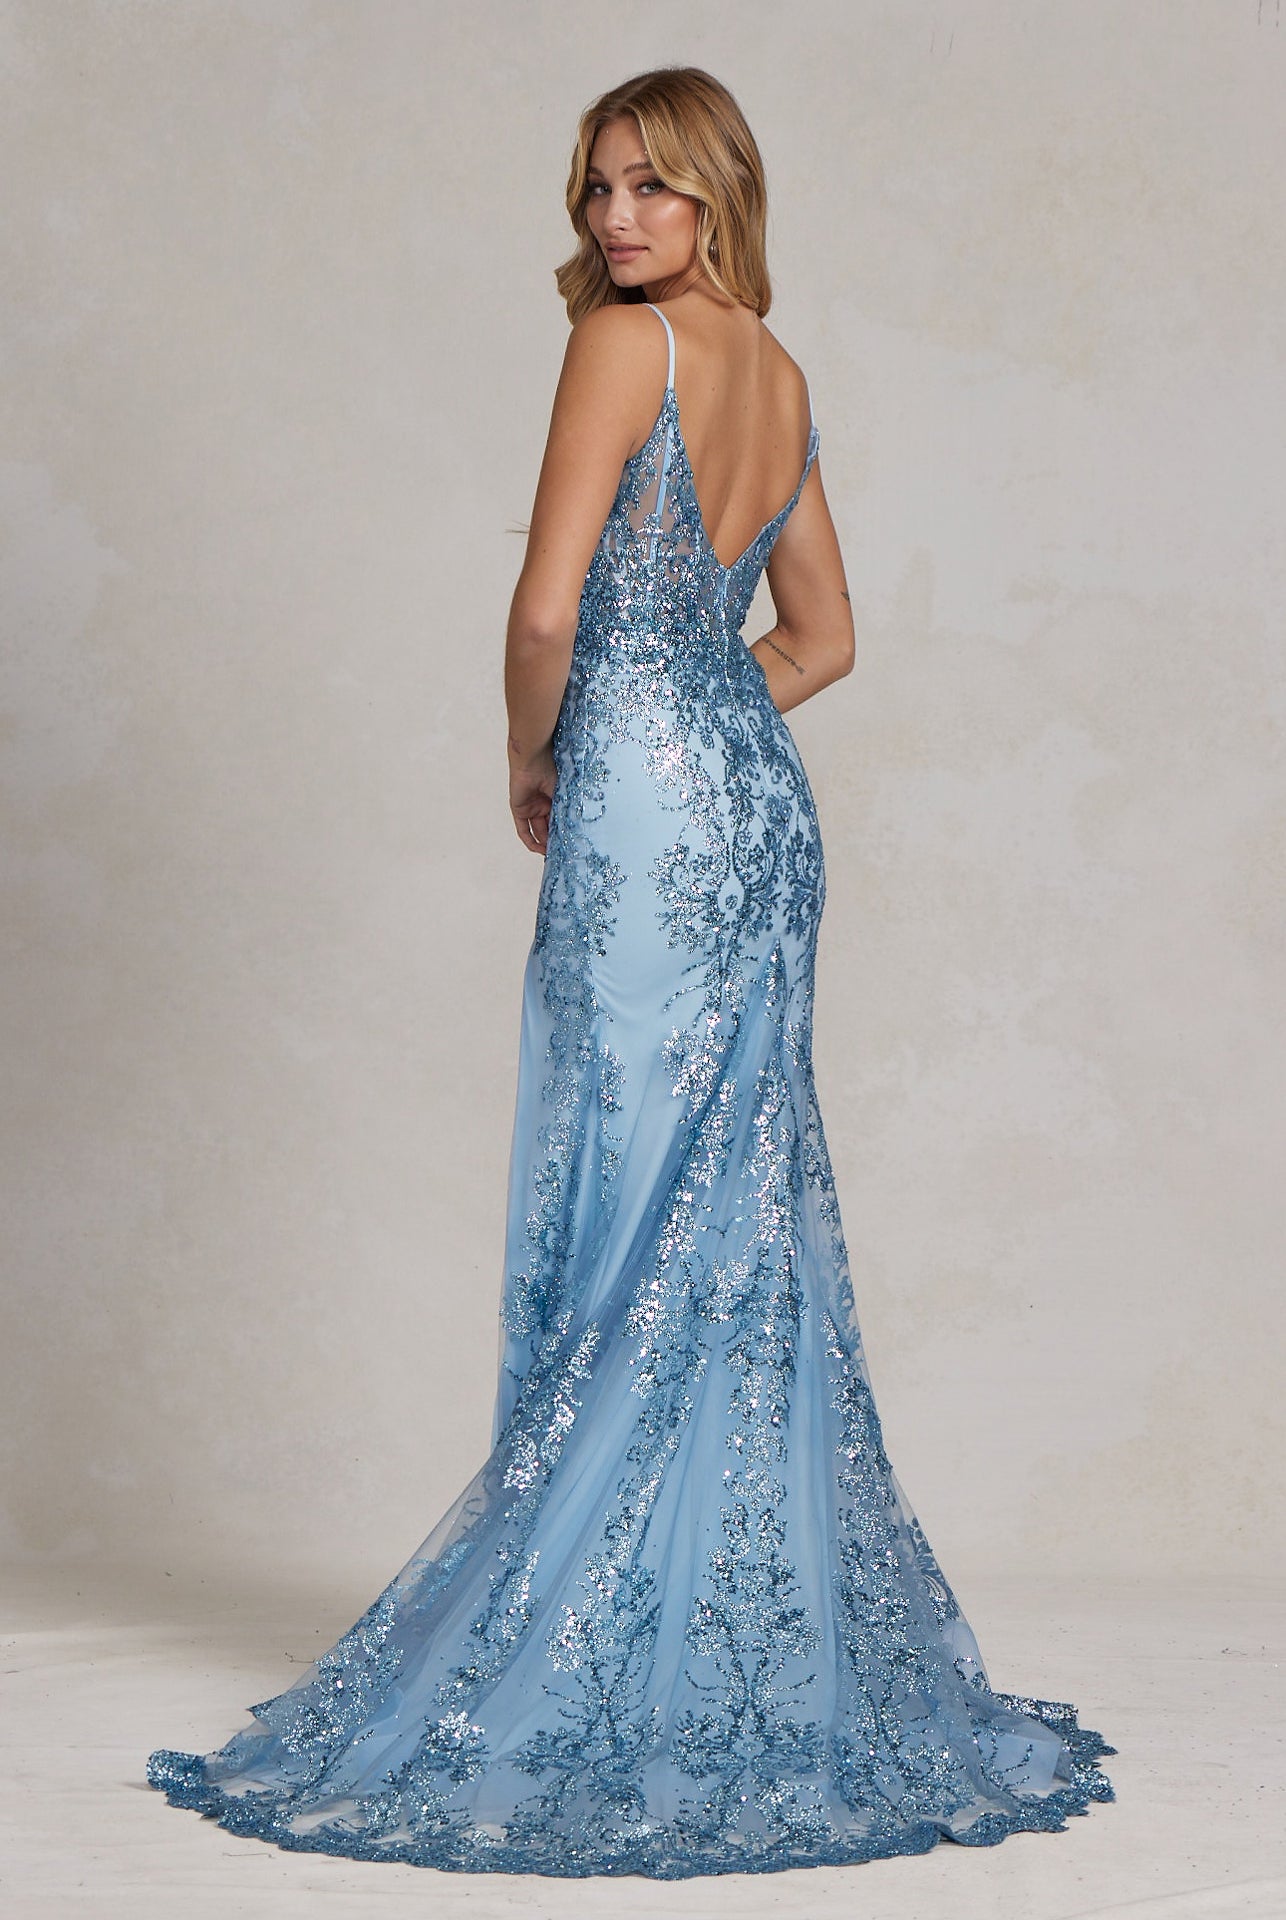 Embroidered Glitter Lace V-Neck Spaghetti Straps Long Prom Dress NXC1197-Prom Dress-smcfashion.com